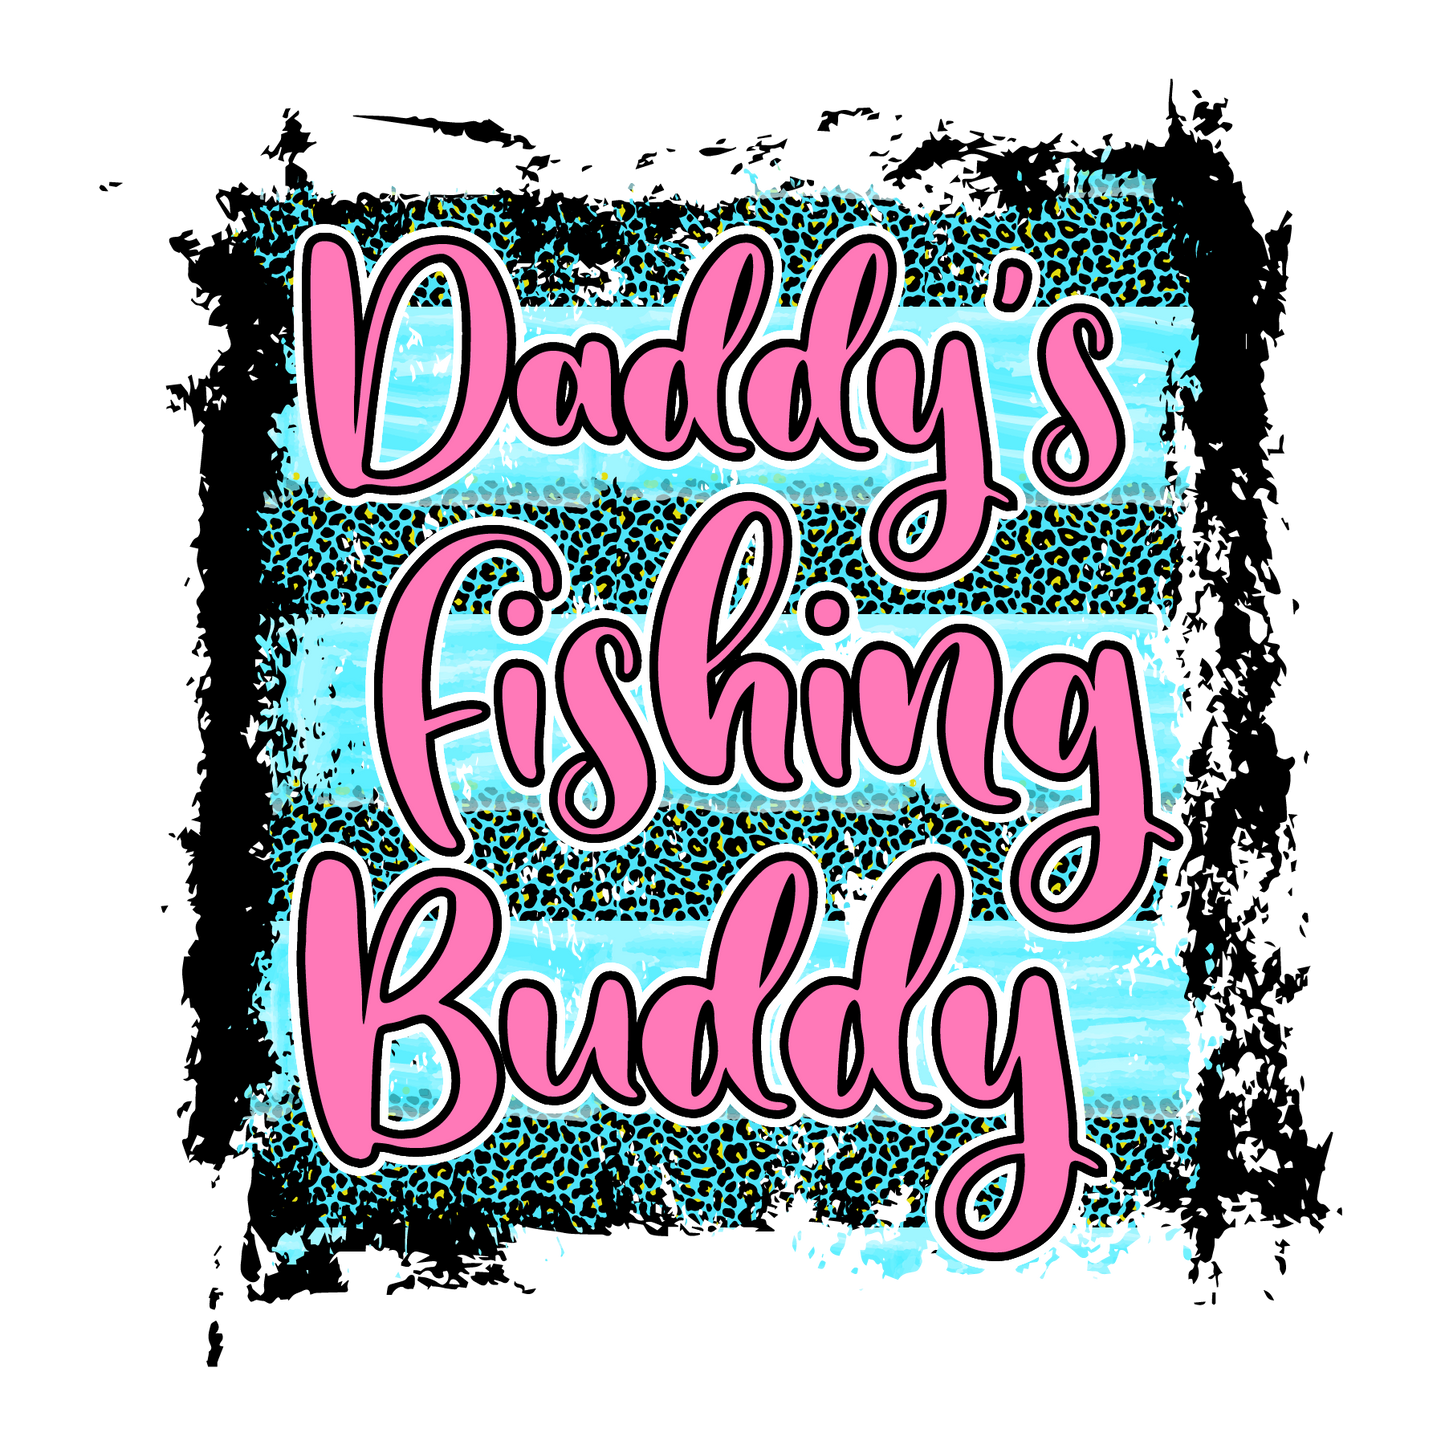 DADDYS FISHING BUDDY